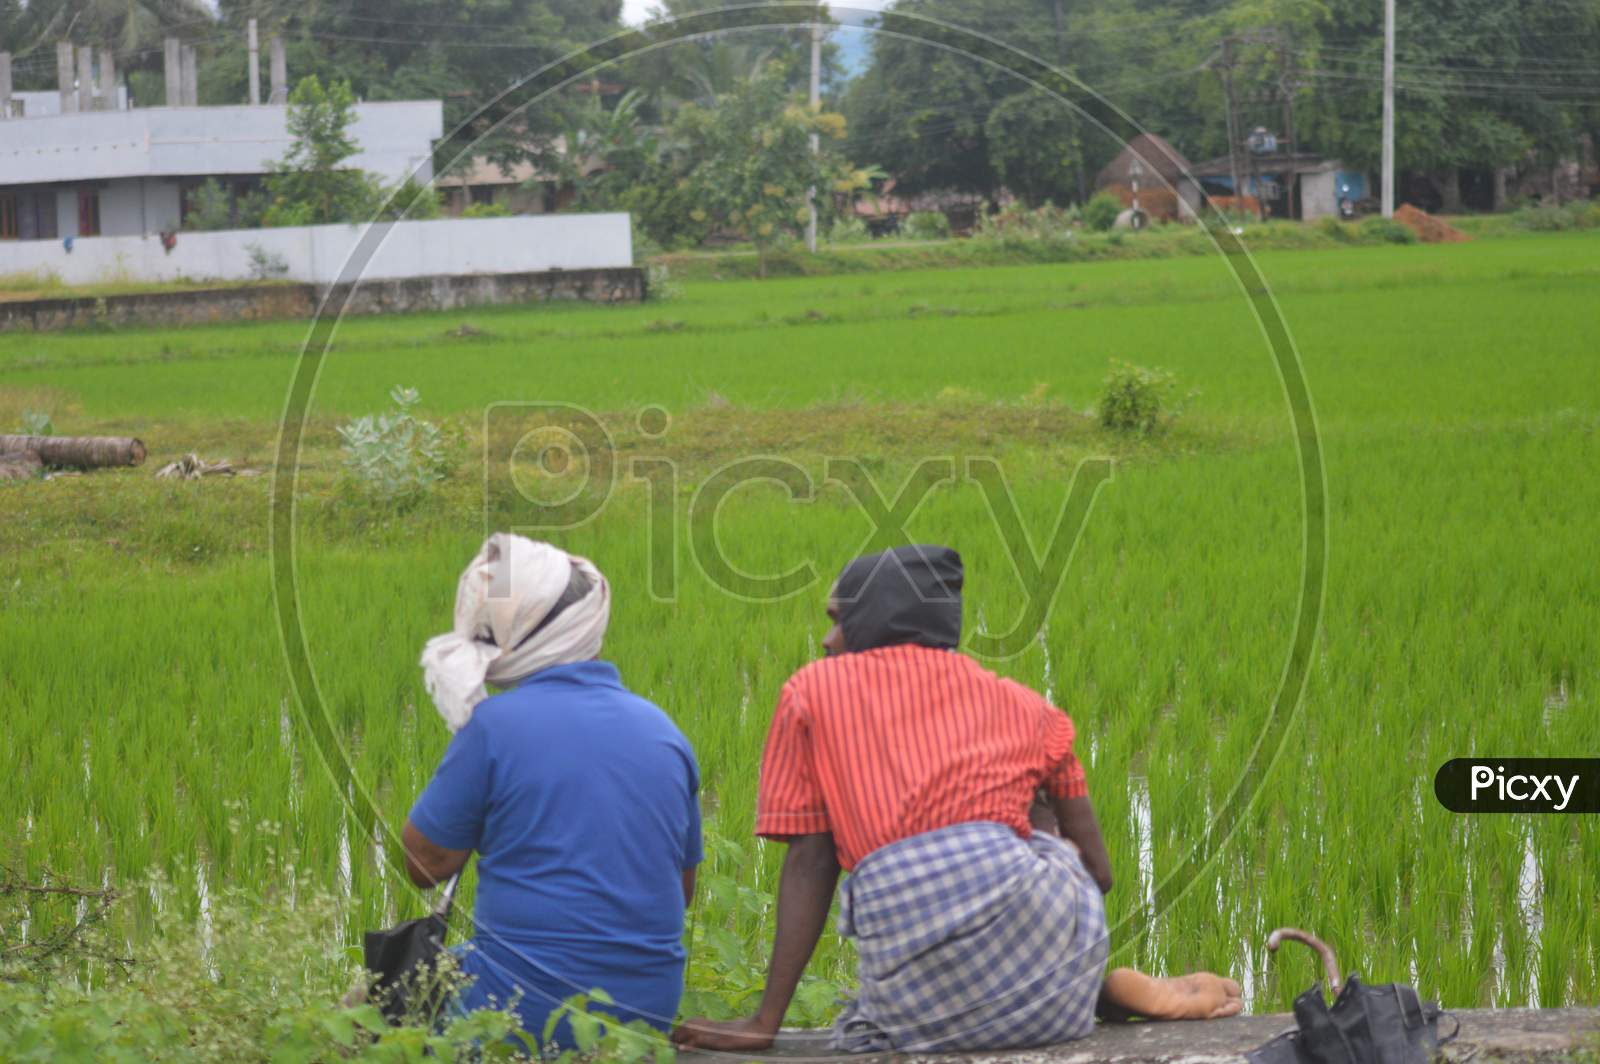 Two Indian farmers friends enjoying evening View